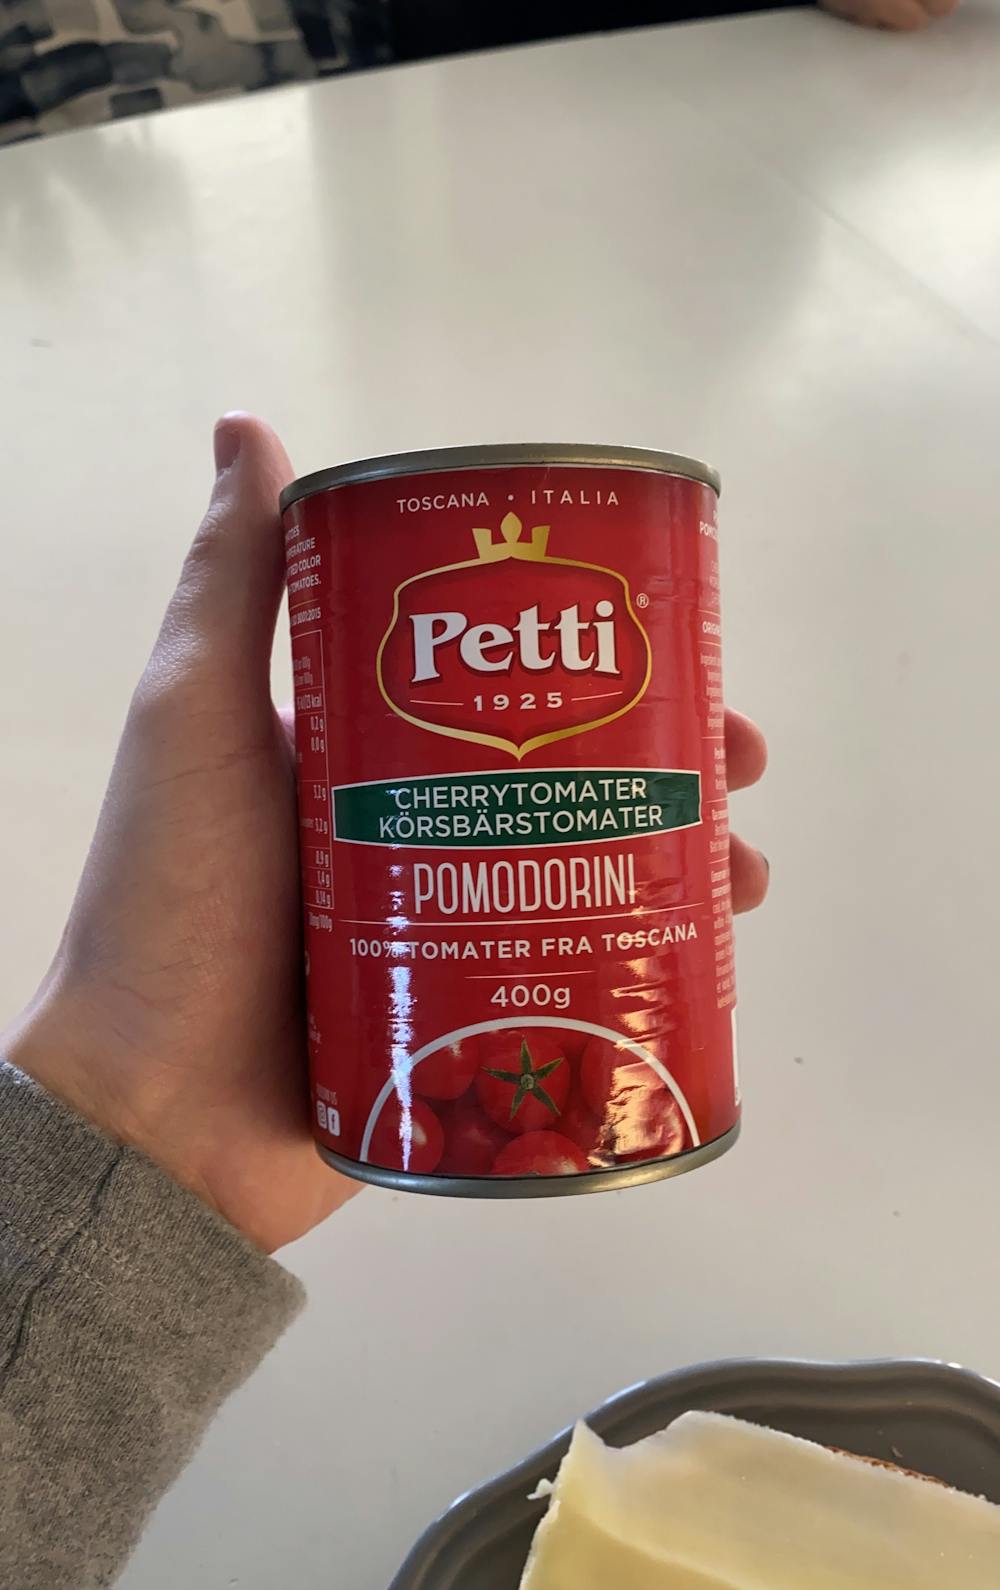 Pomodorini, cherrytomater, Petti